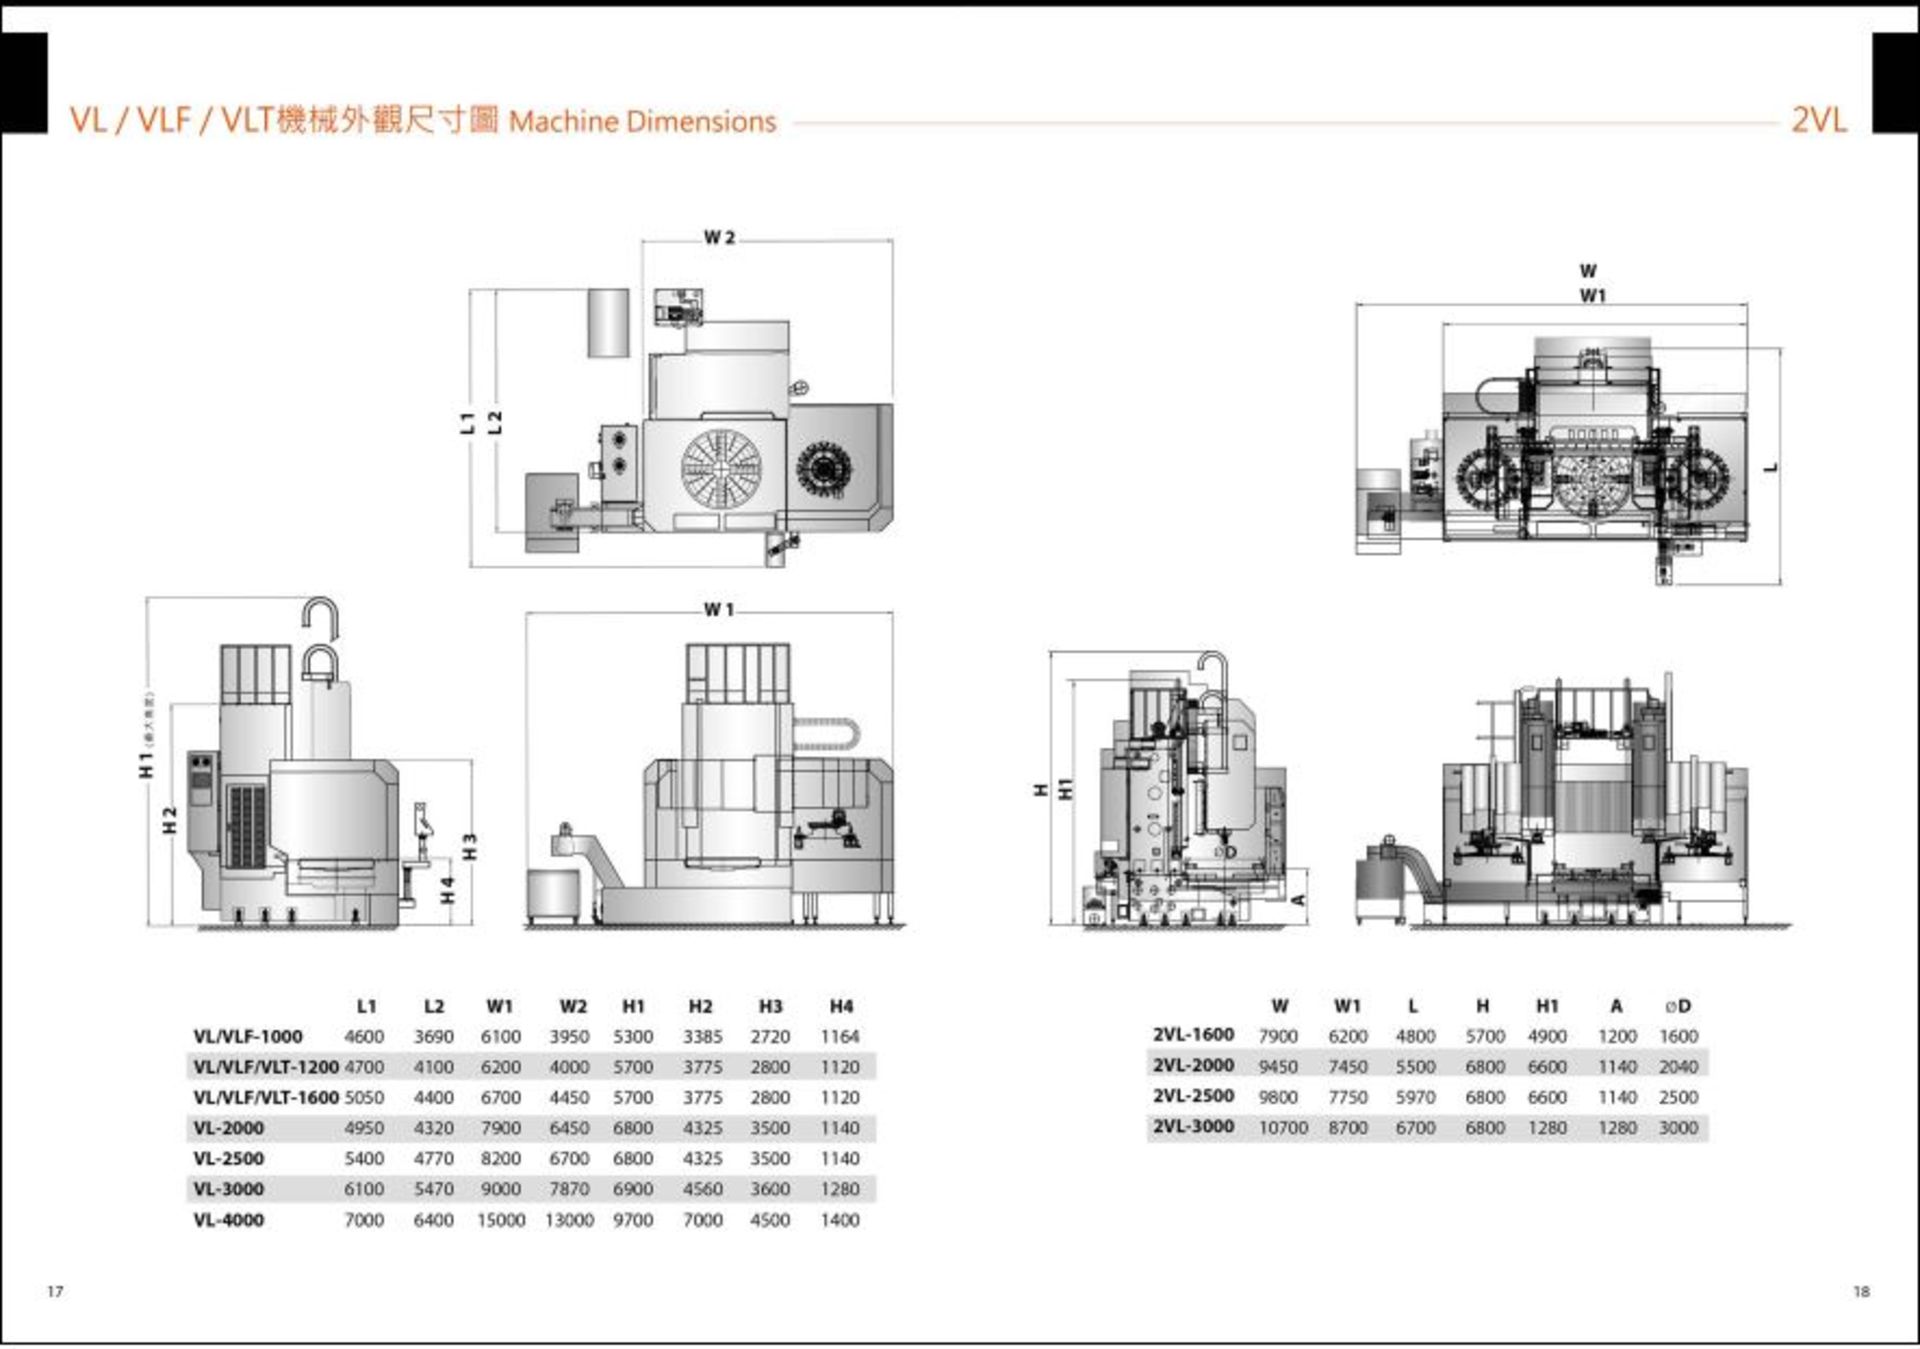 98.5" YSP/Yu Shine VL-2500ATC+C CNC Vertical Turning Boring Mill, New 2013 - Image 14 of 15